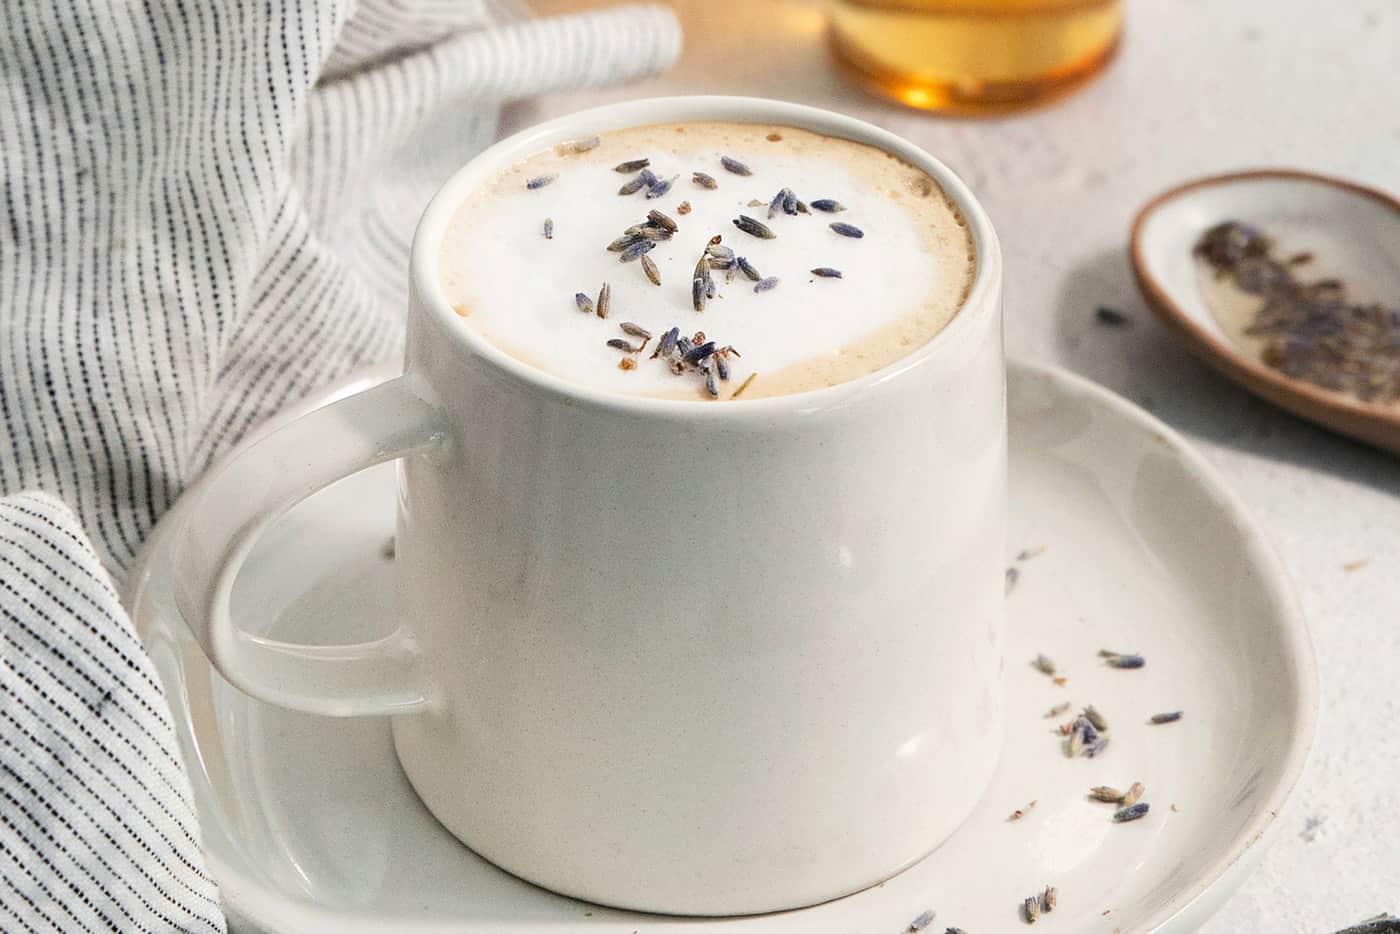 A mug of lavender latte on a plate.